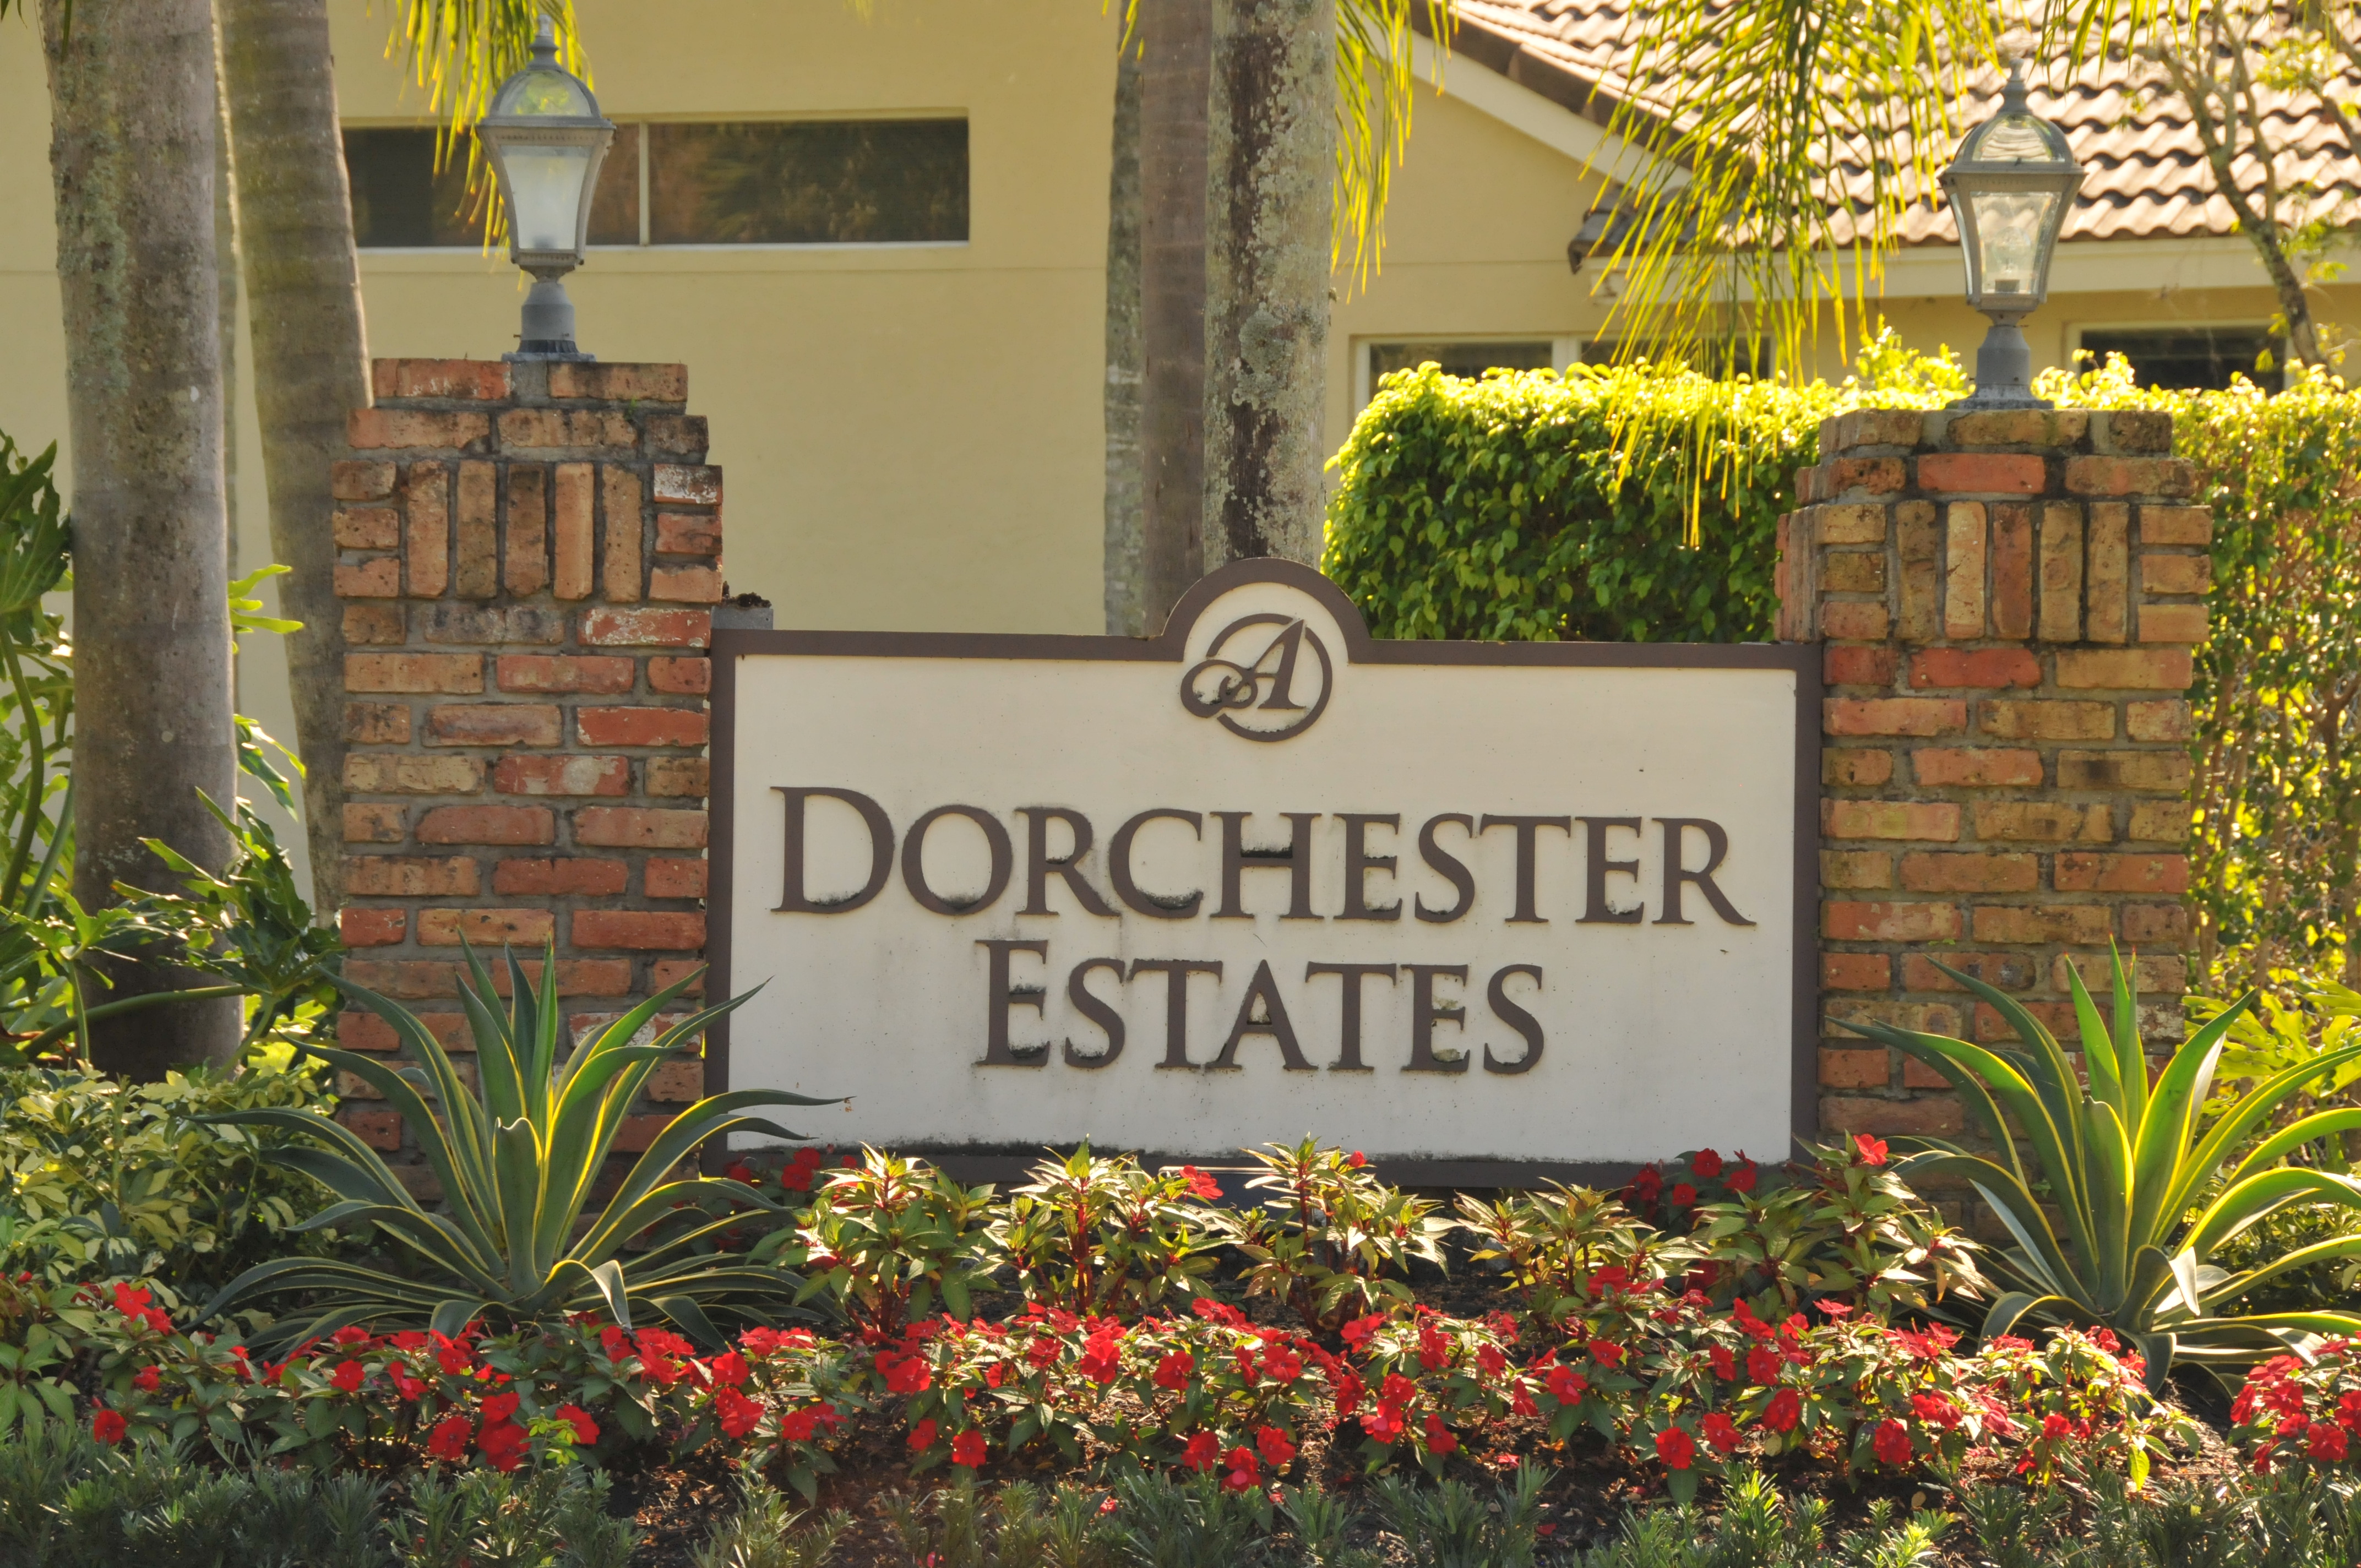 Dorchester Estates